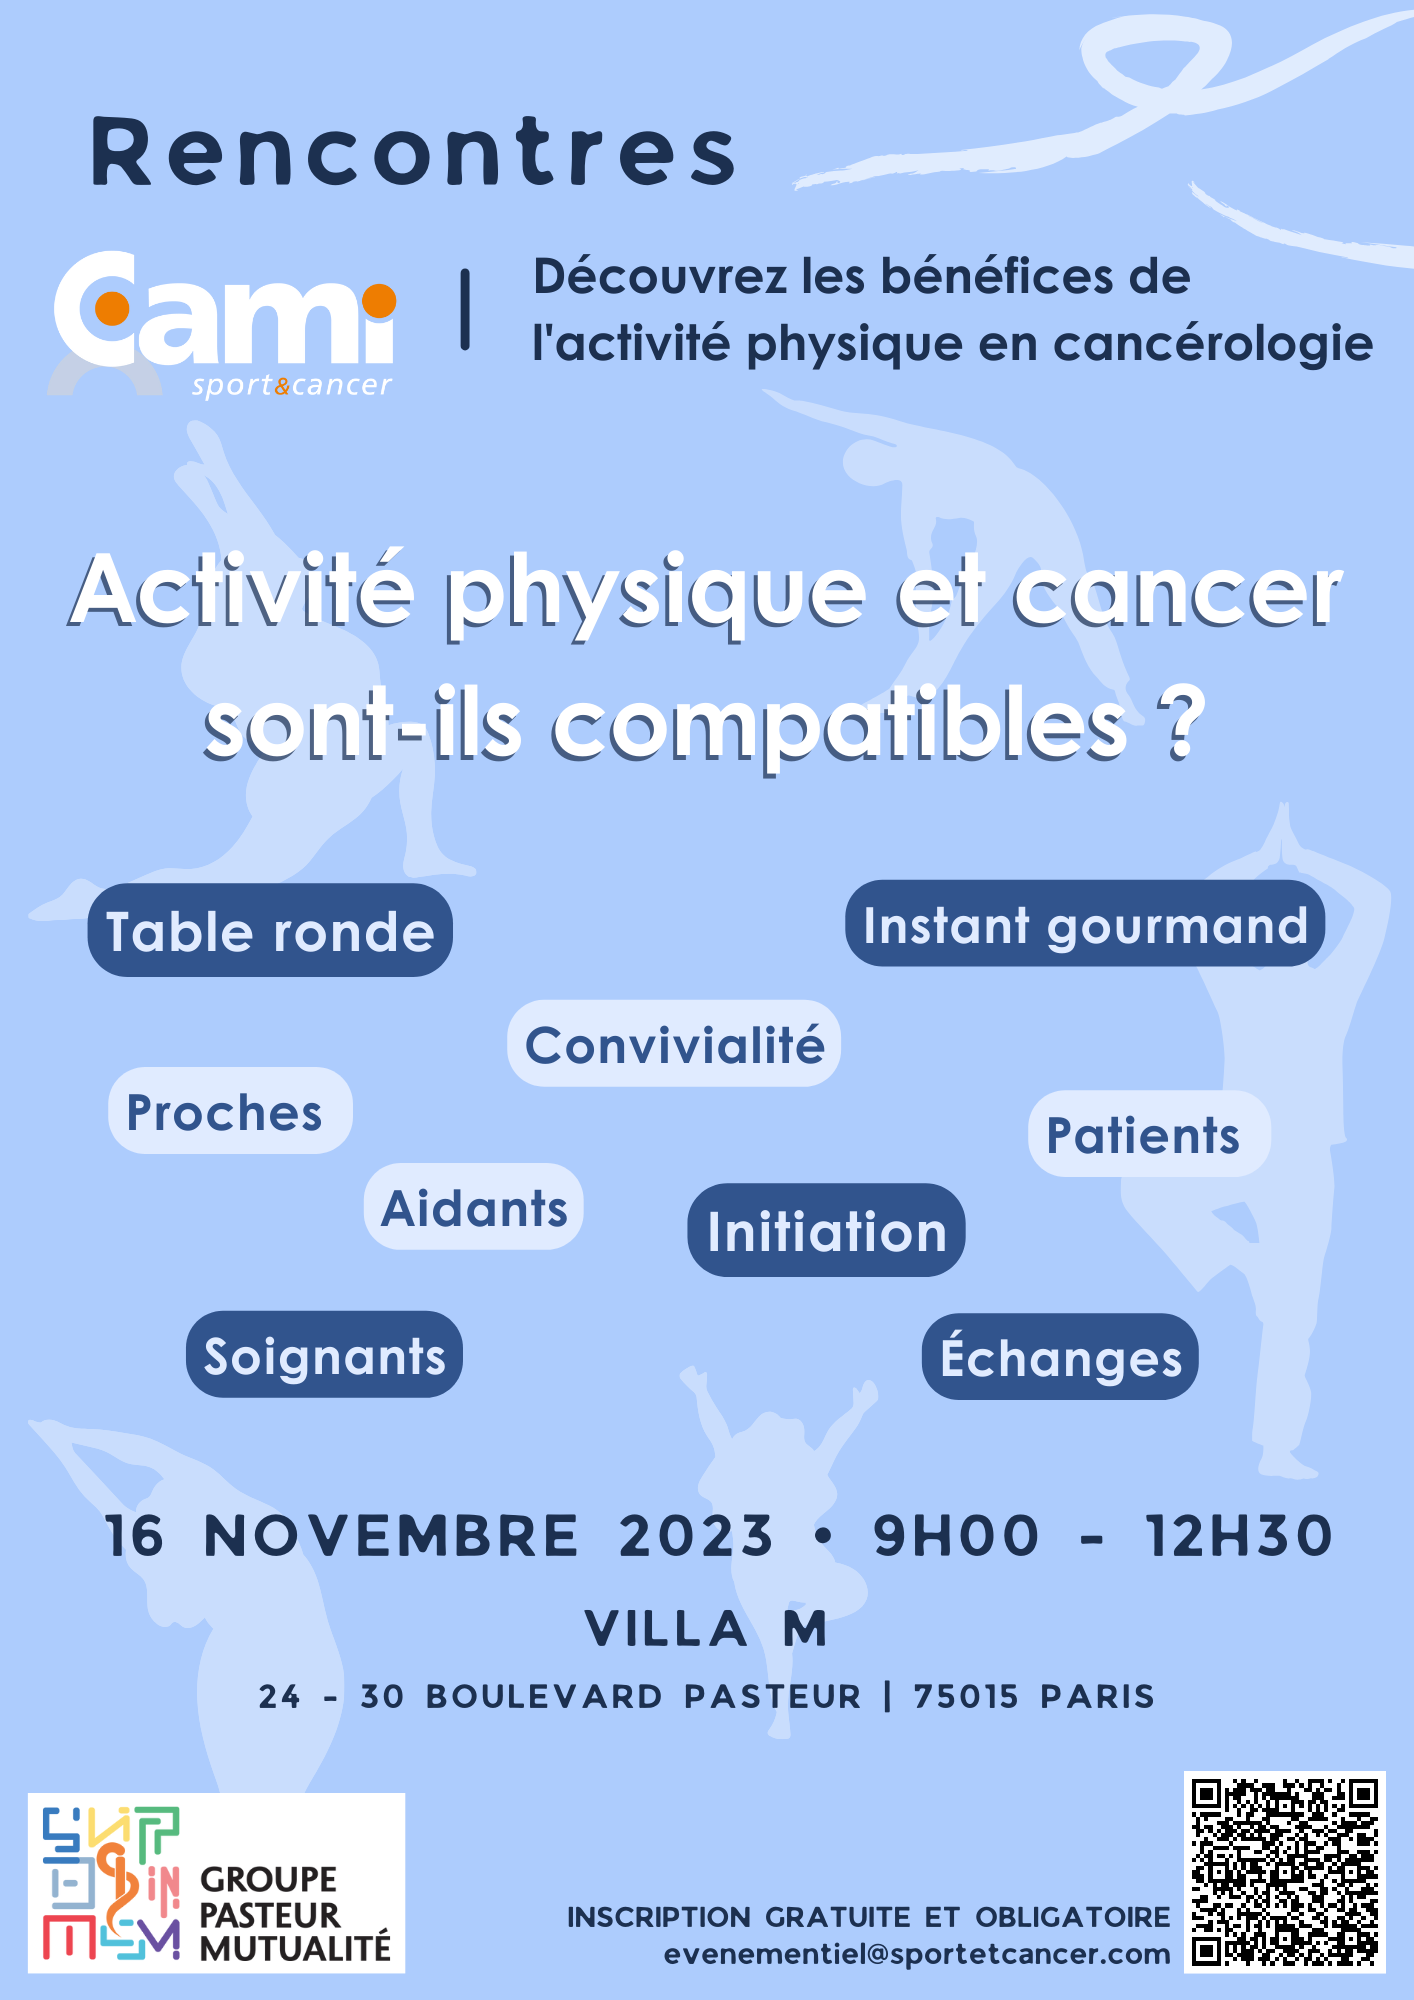 Rencontres CAMI à Paris